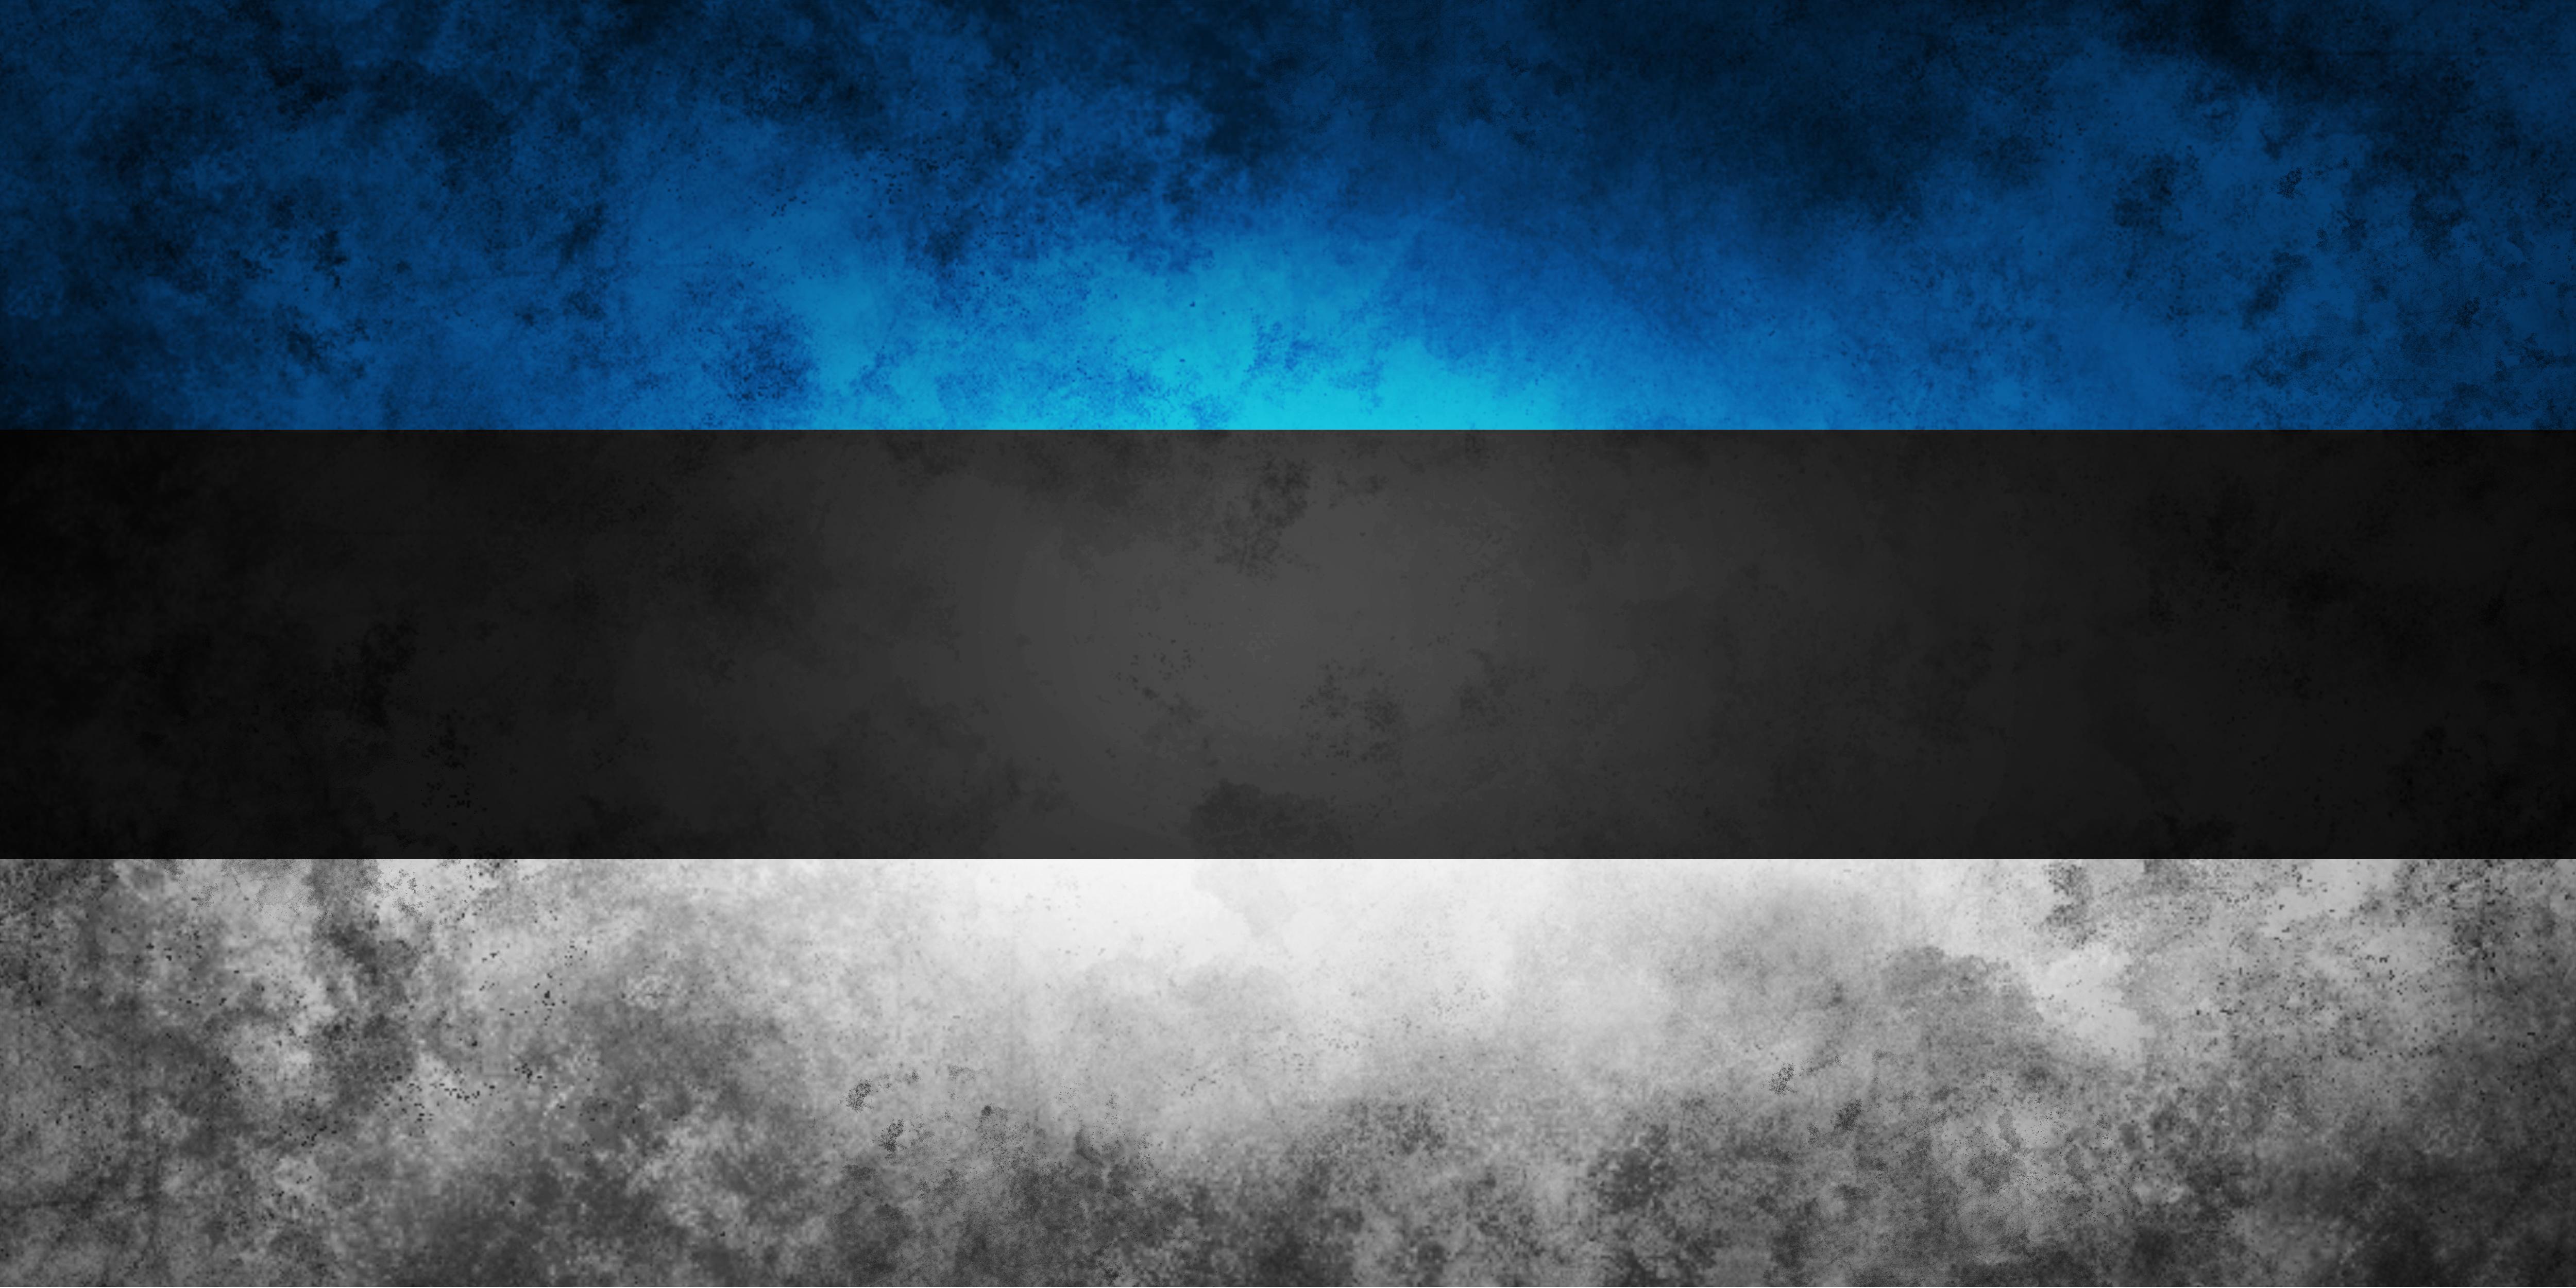 Estonia Flag Wallpapers